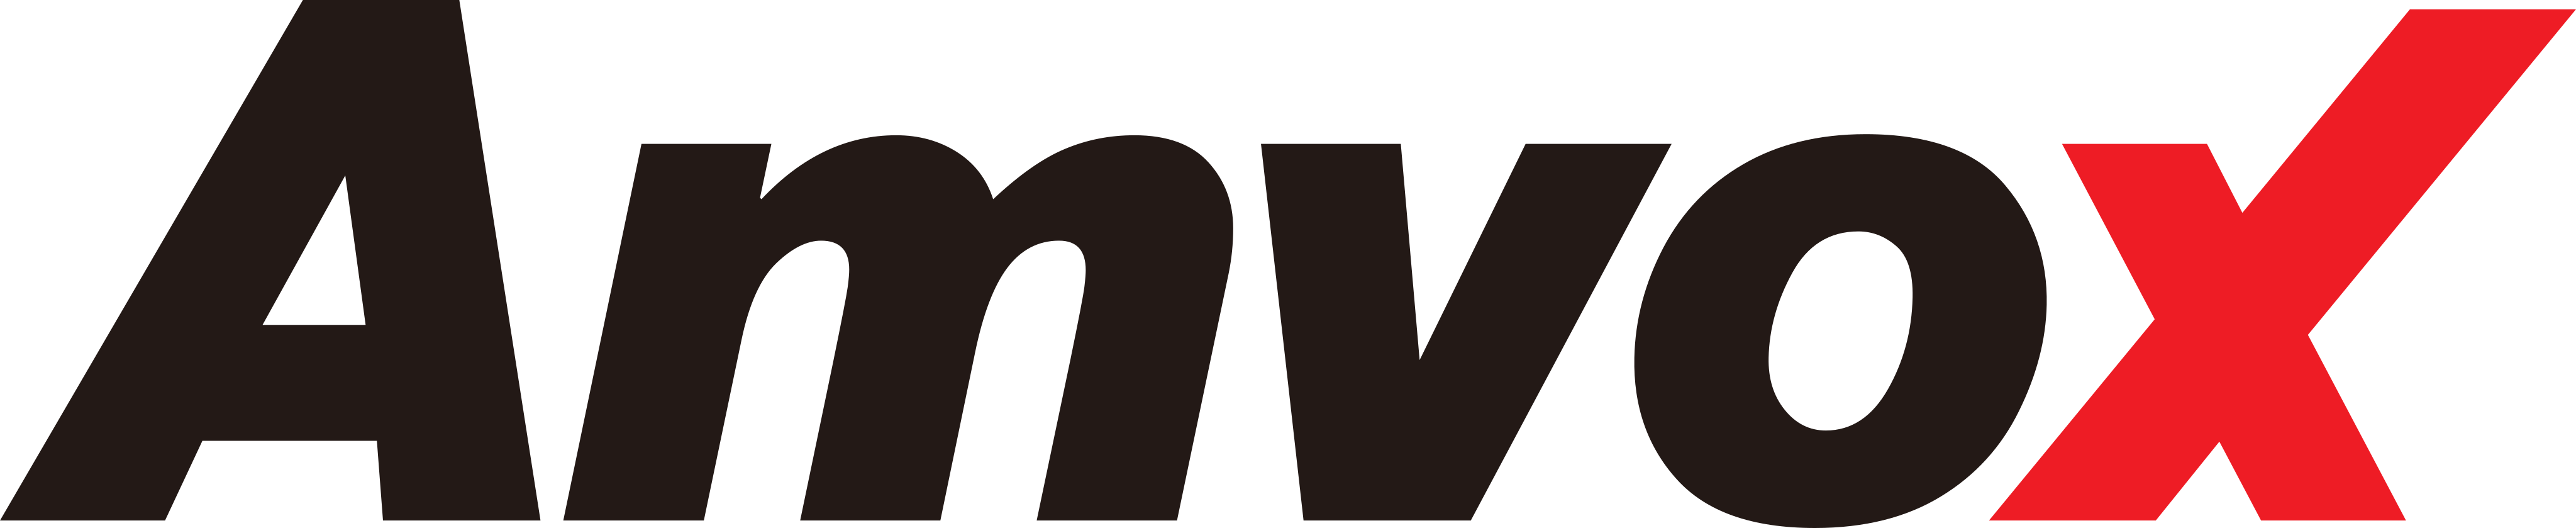 Amvox Logo.